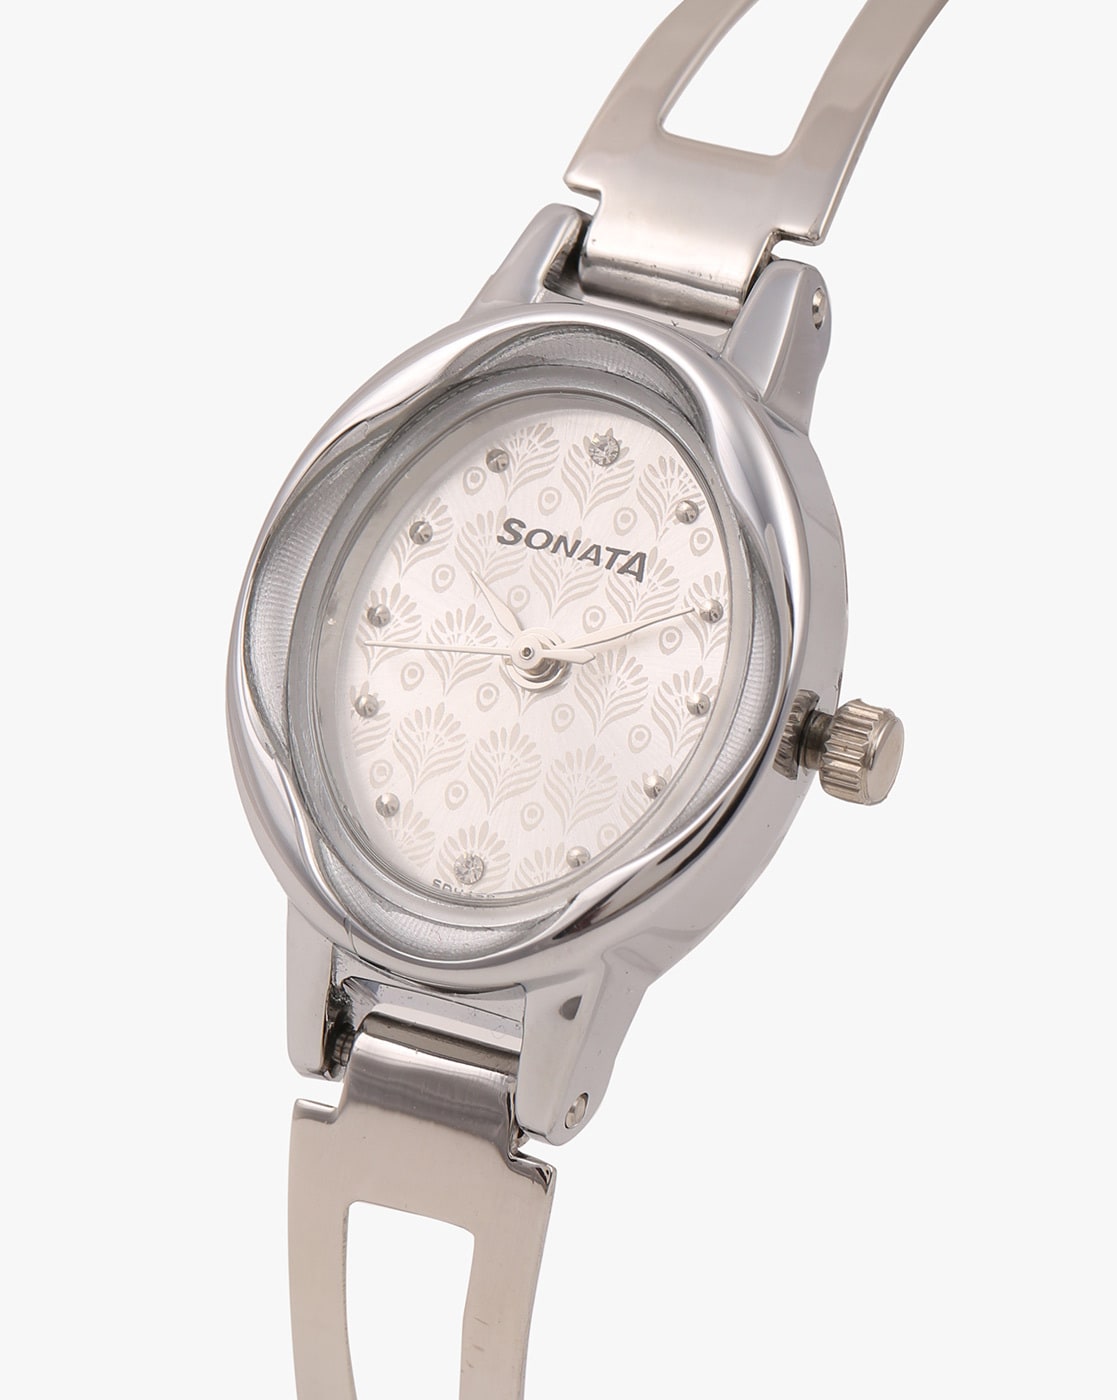 Sonata Silver Dial Analog watch For Men-NR7140SM01 : Amazon.in: Fashion